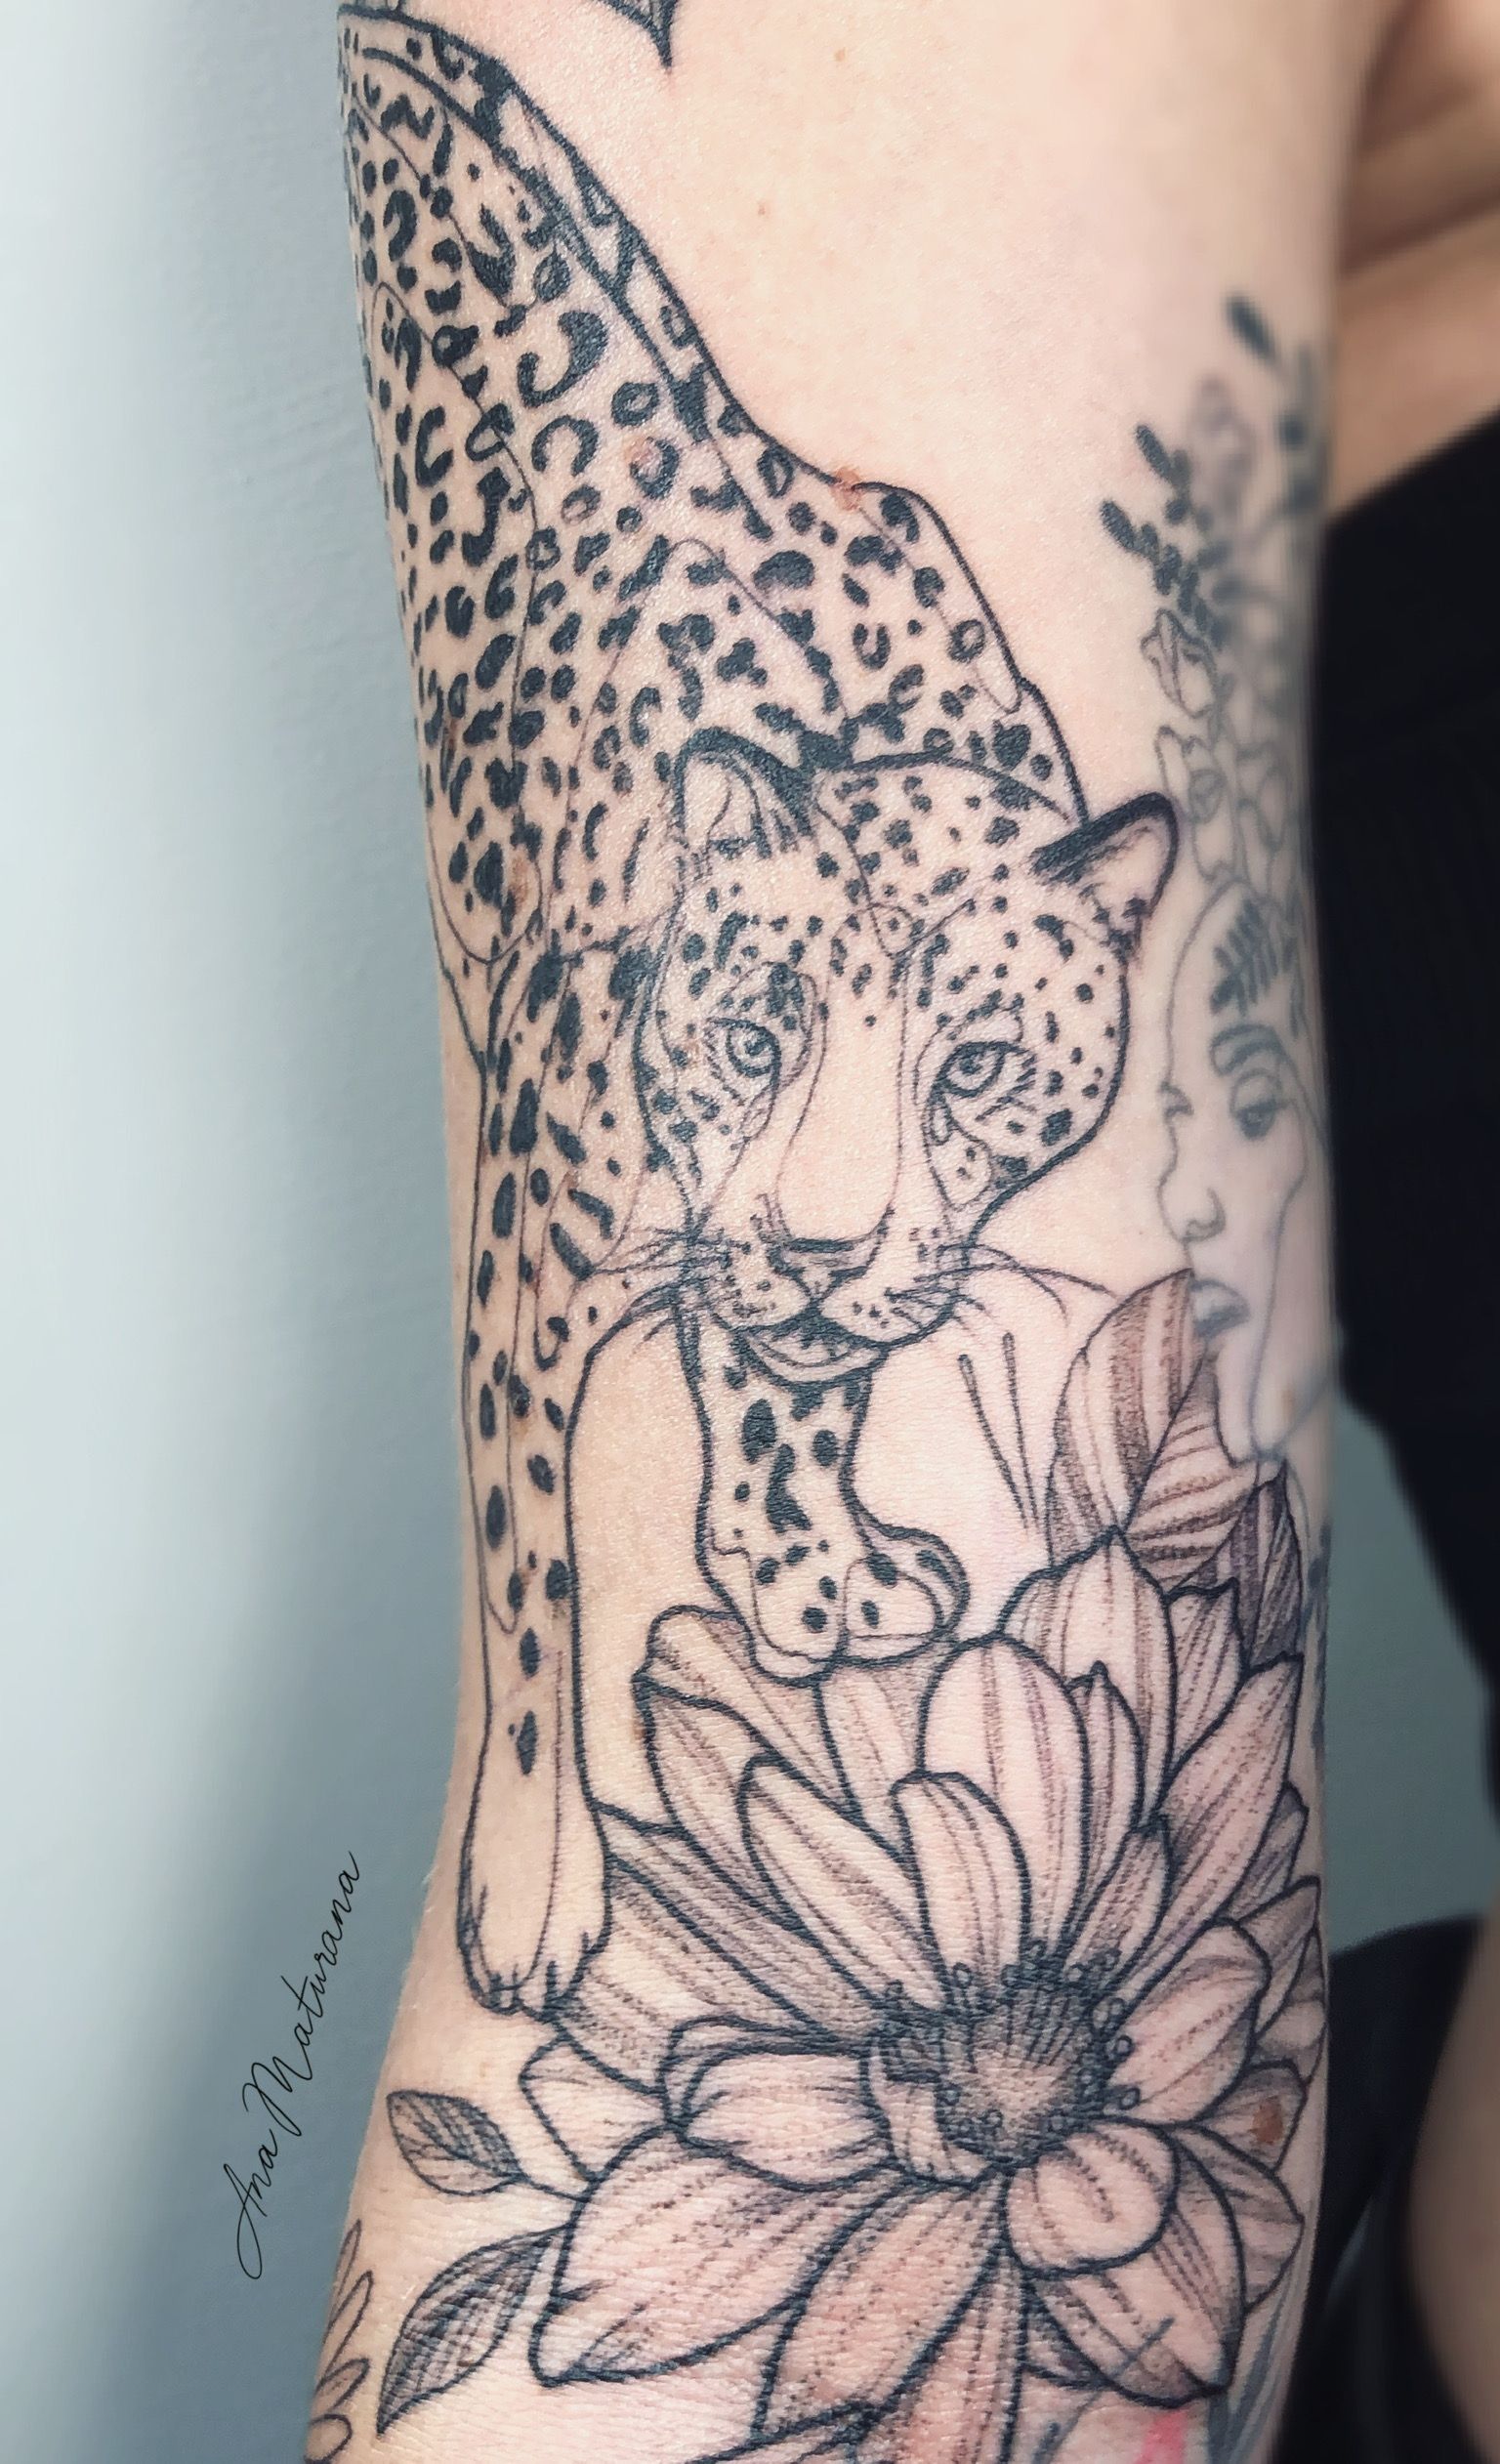 James - Electric Cheetah Tattoos